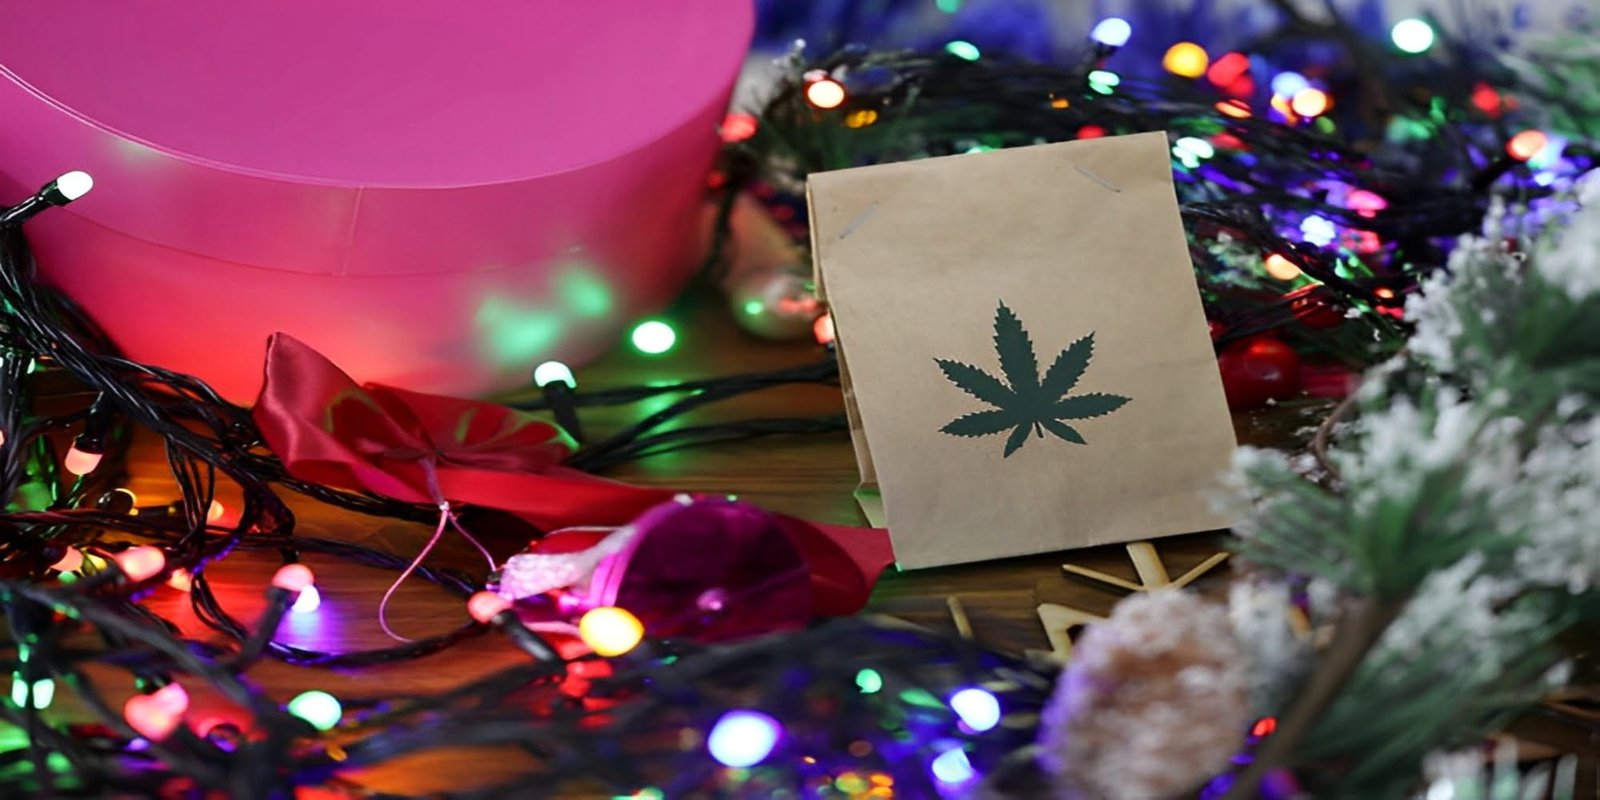 Paper bag with marijuana plant decorating the bag